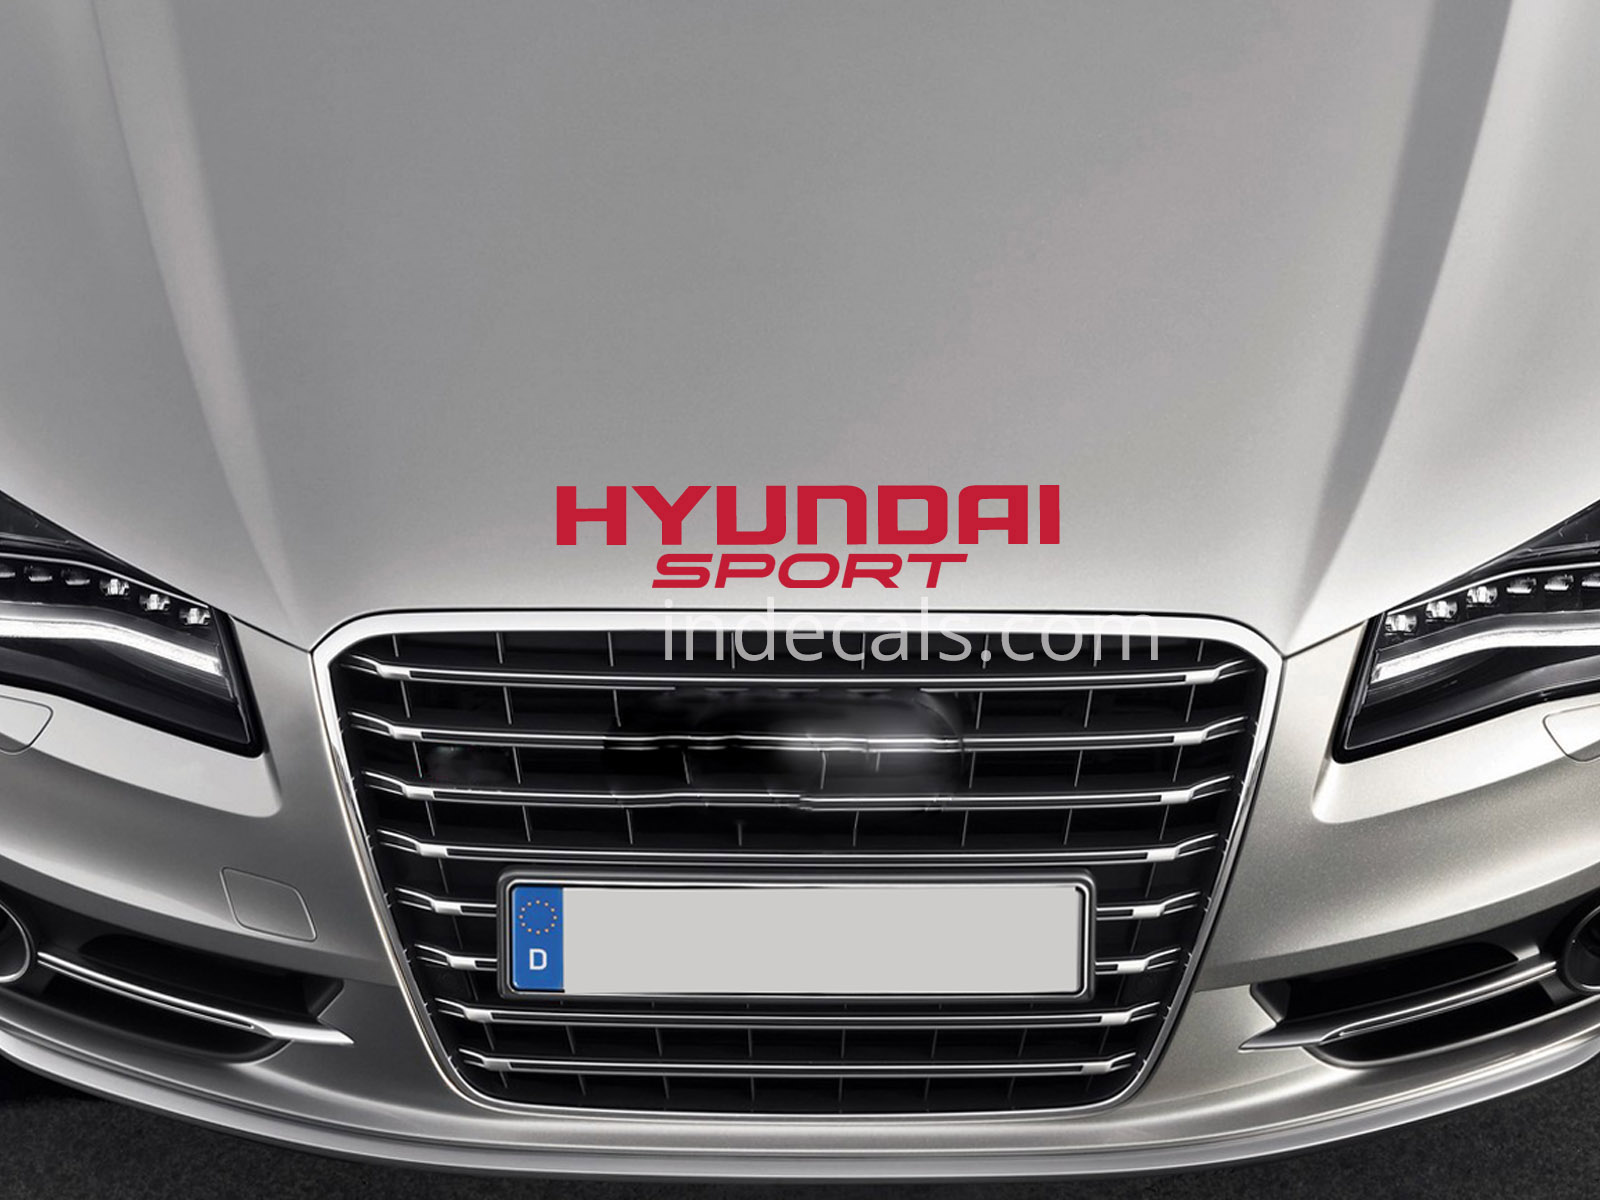 1 x Hyundai Sport Sticker for Bonnet - Red